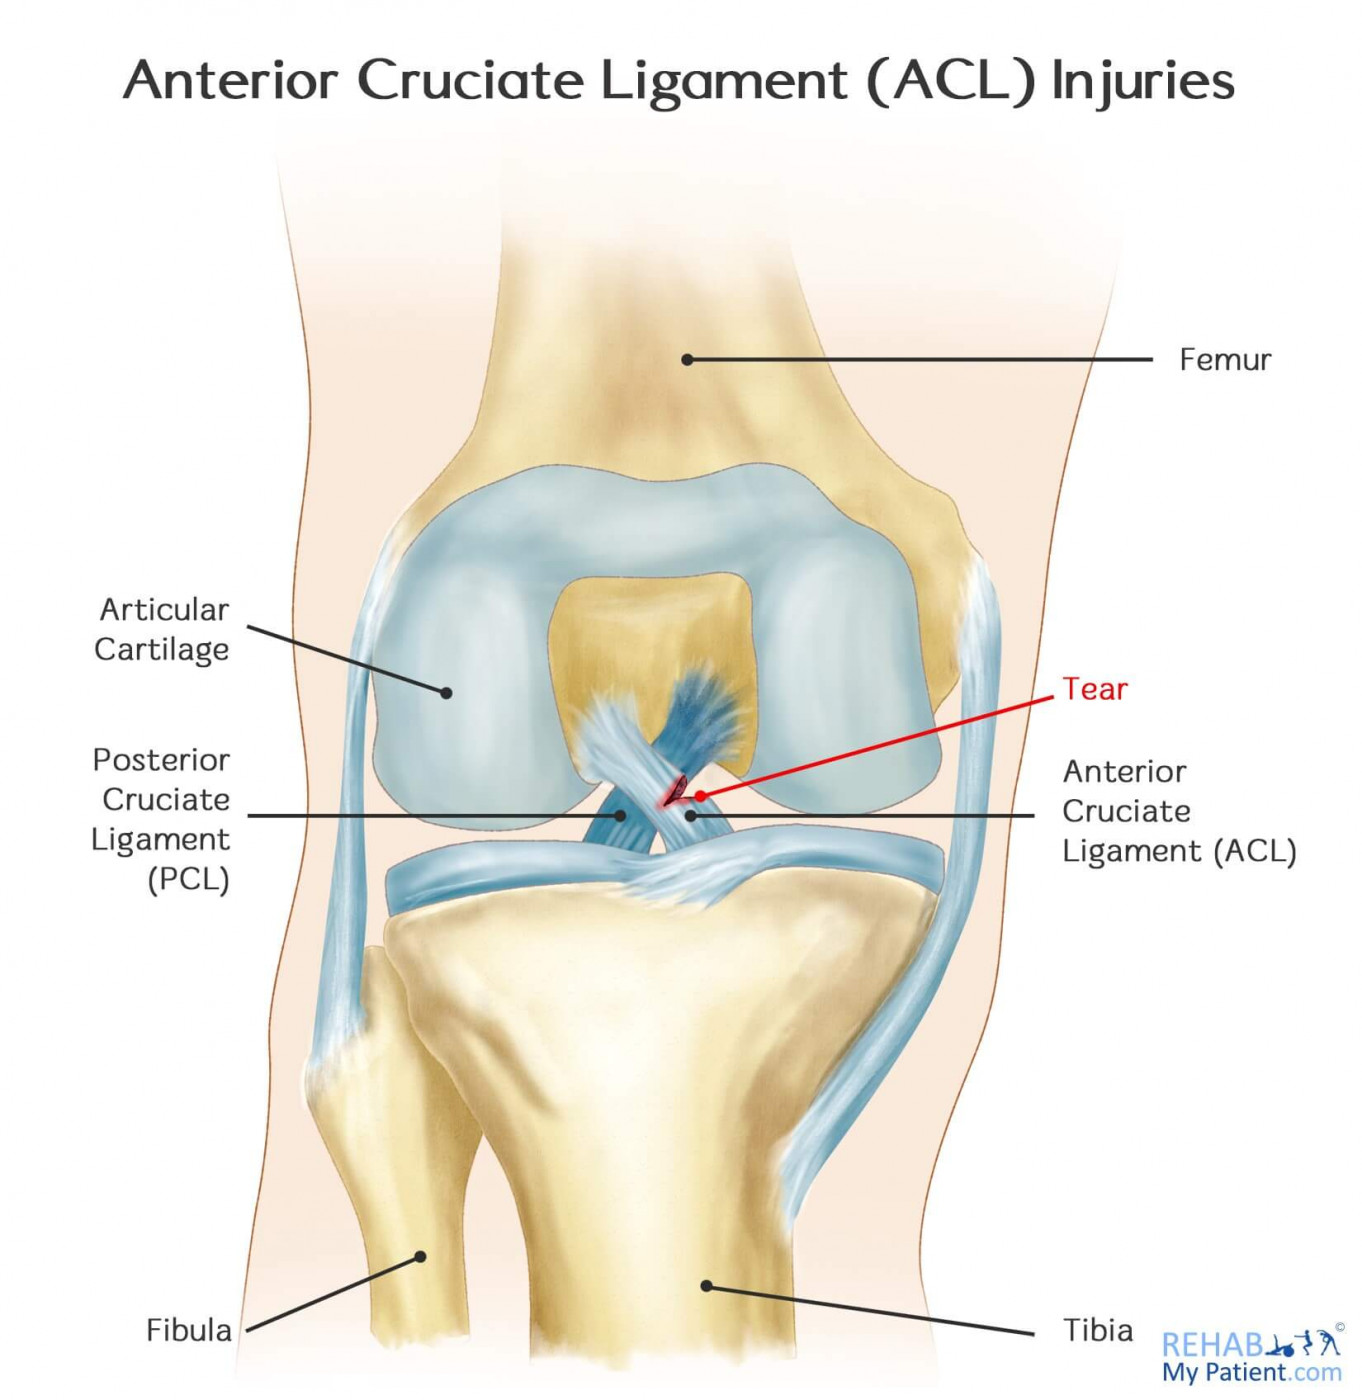 Anterior Cruciate Ligament Injuries